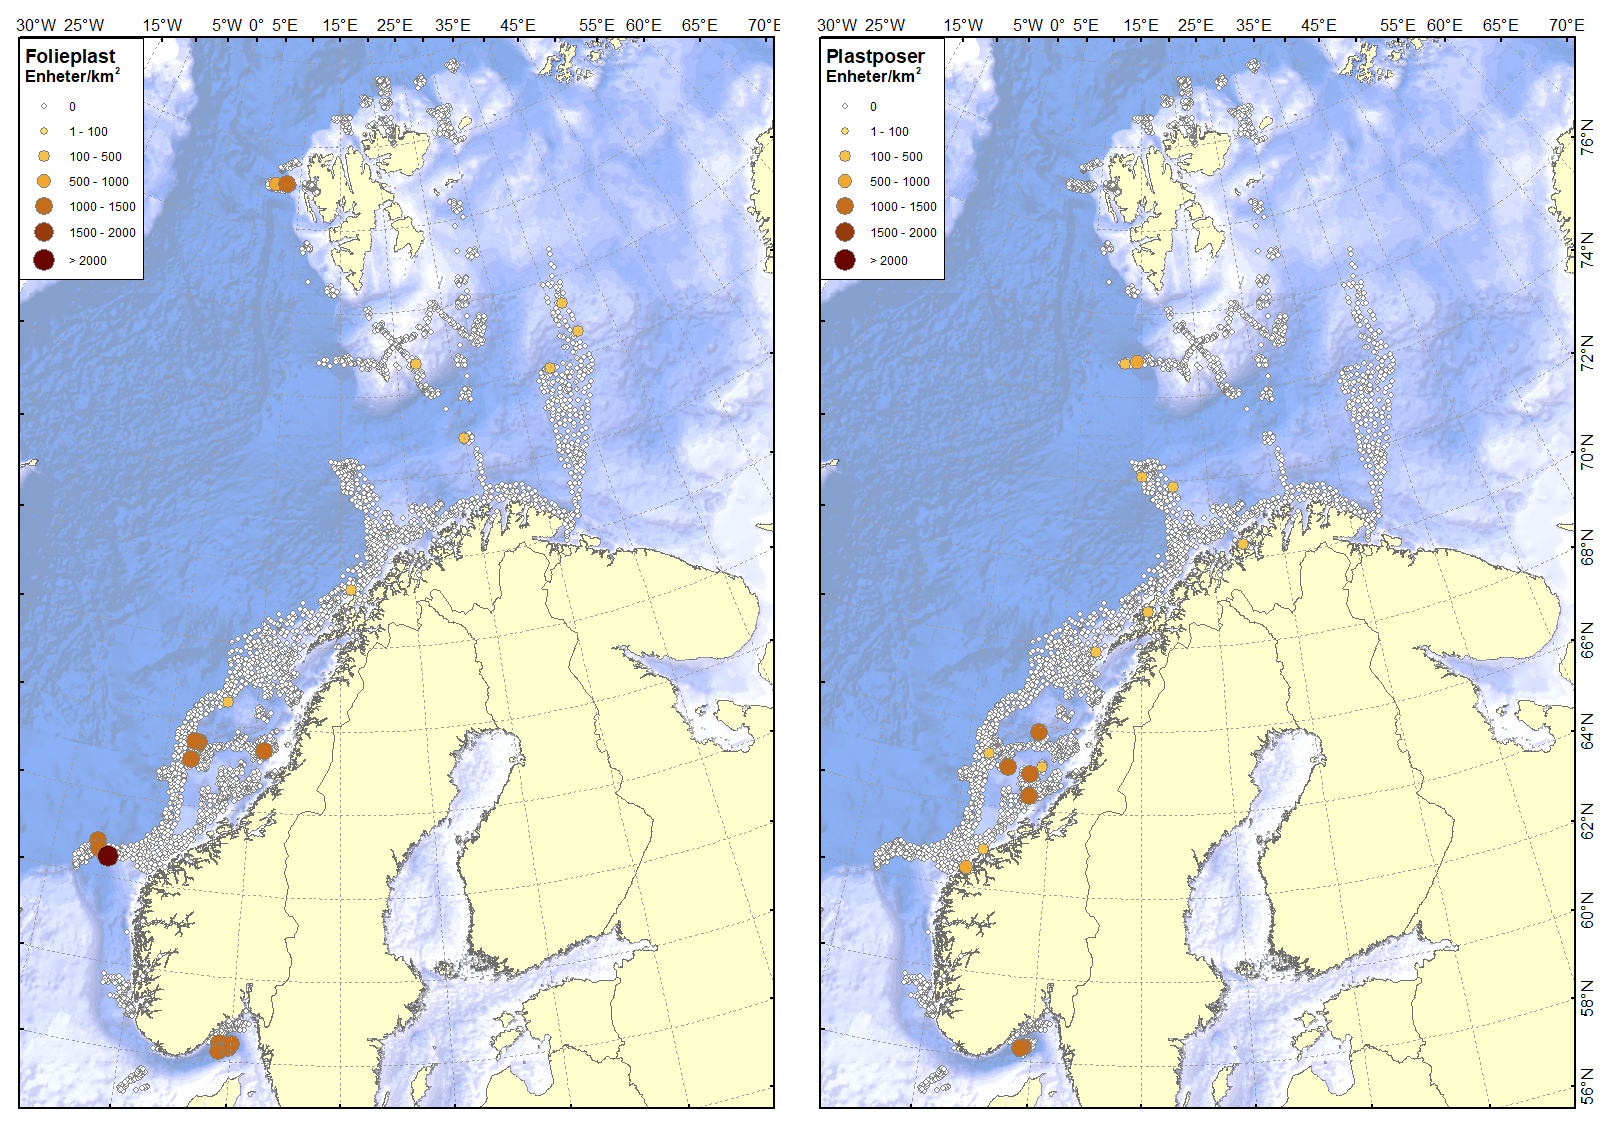 To kart over norskekysten med punkt som markerer plastfunn.